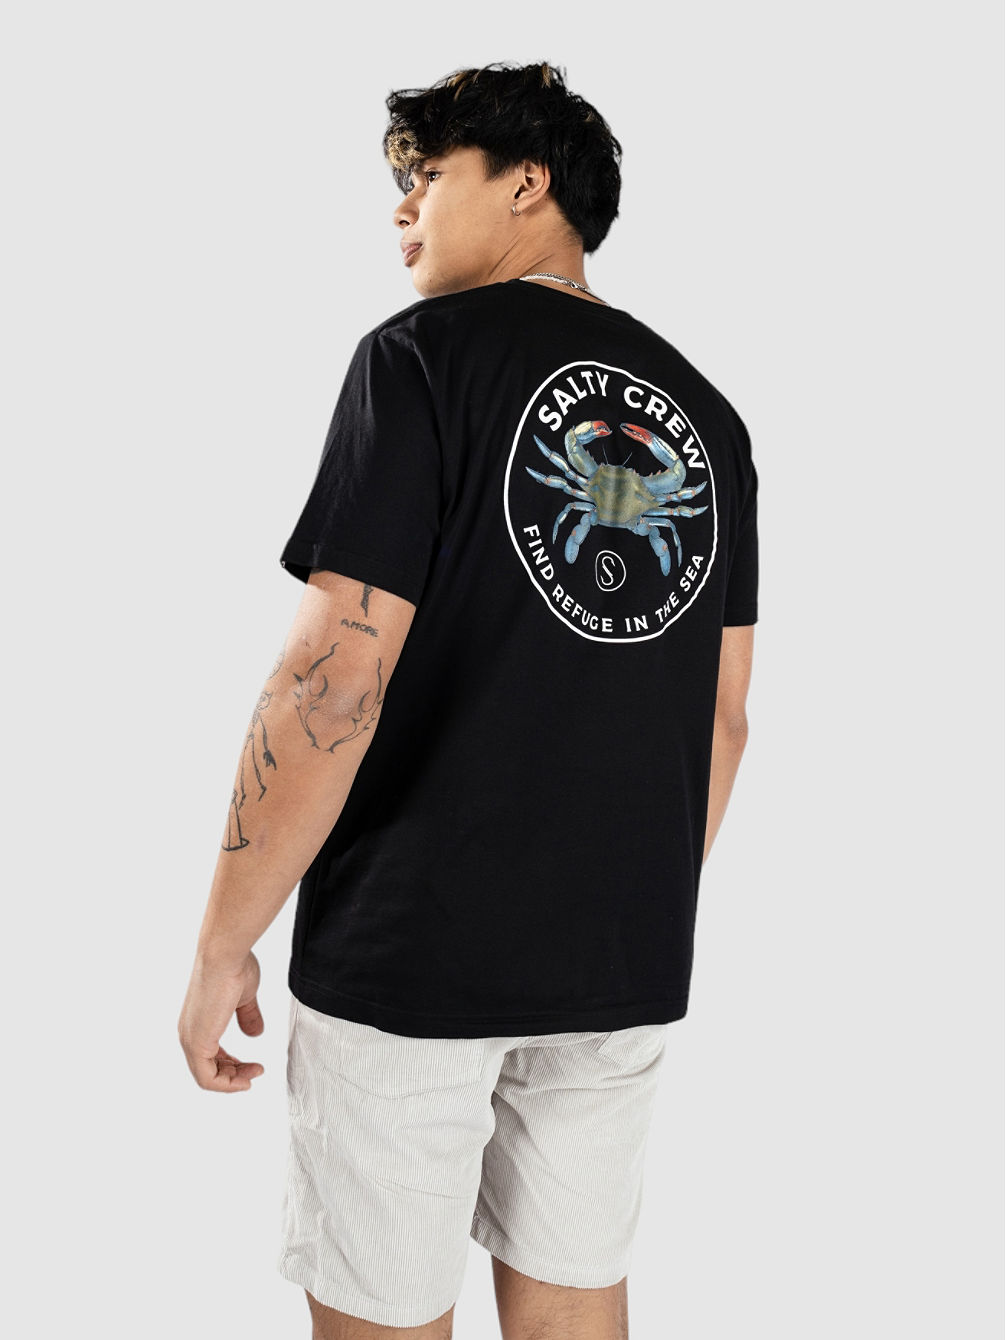 Blue Crabber Premium T-Shirt